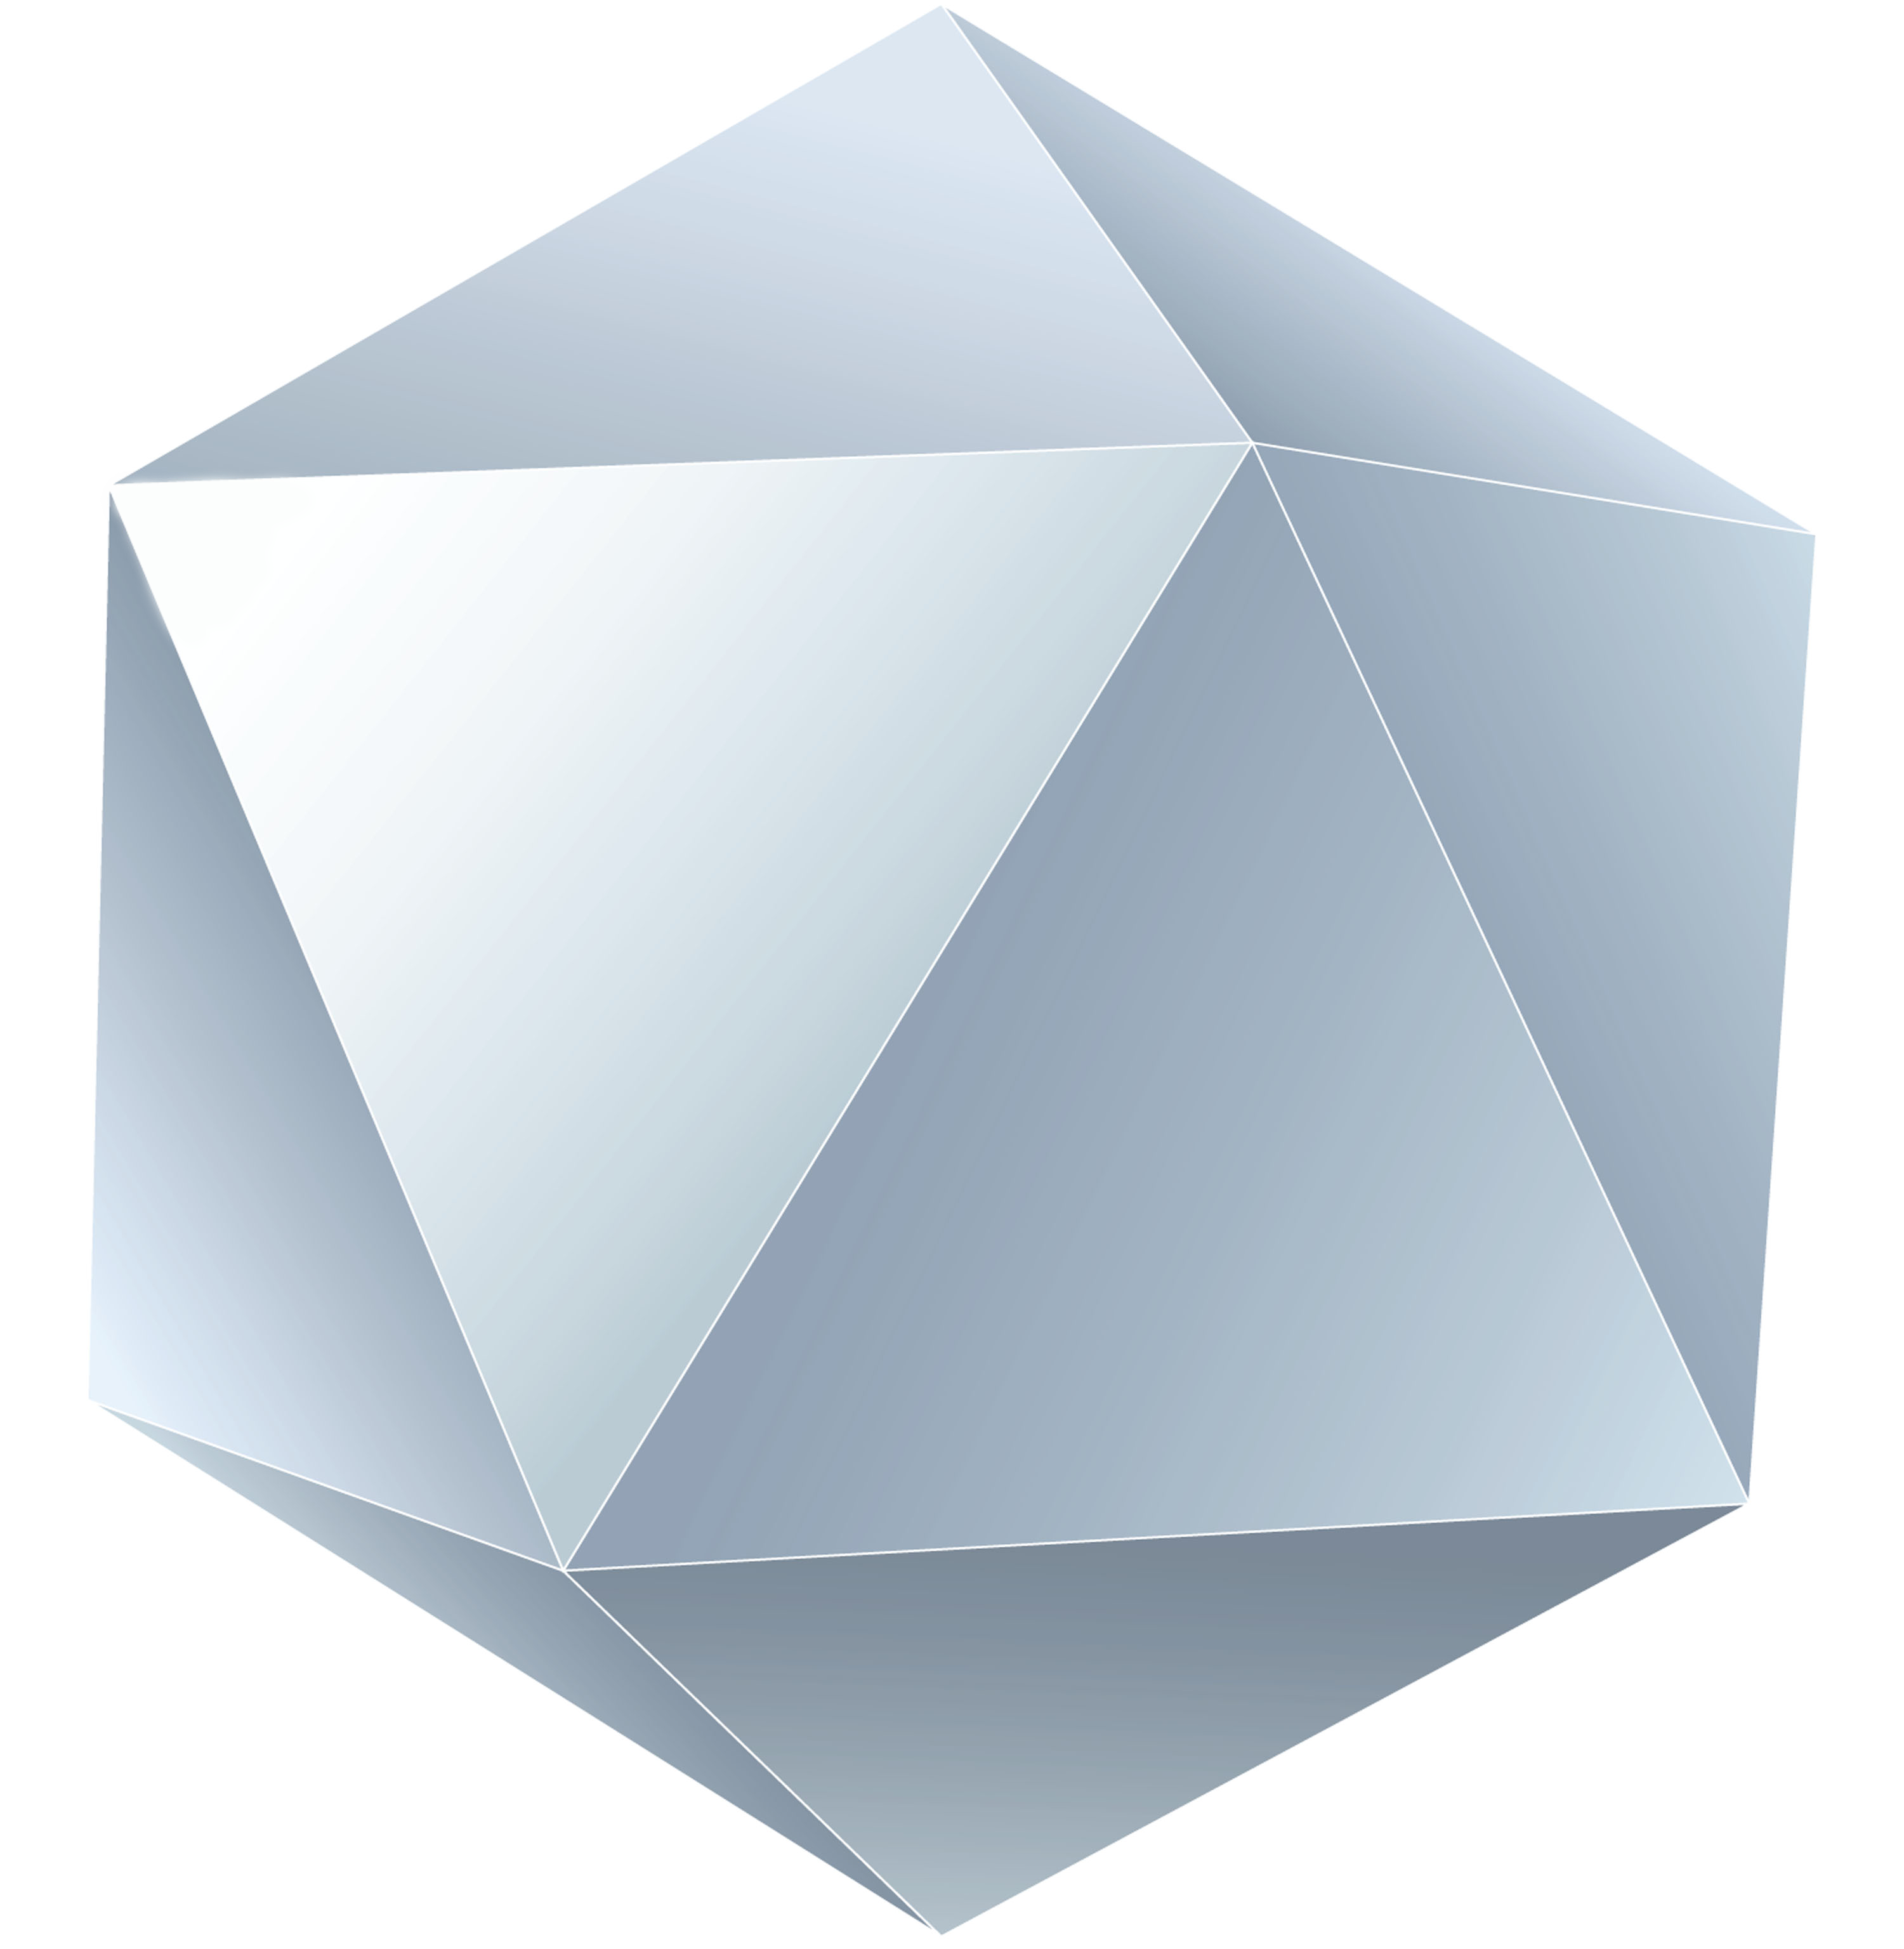 A silver icosahedron